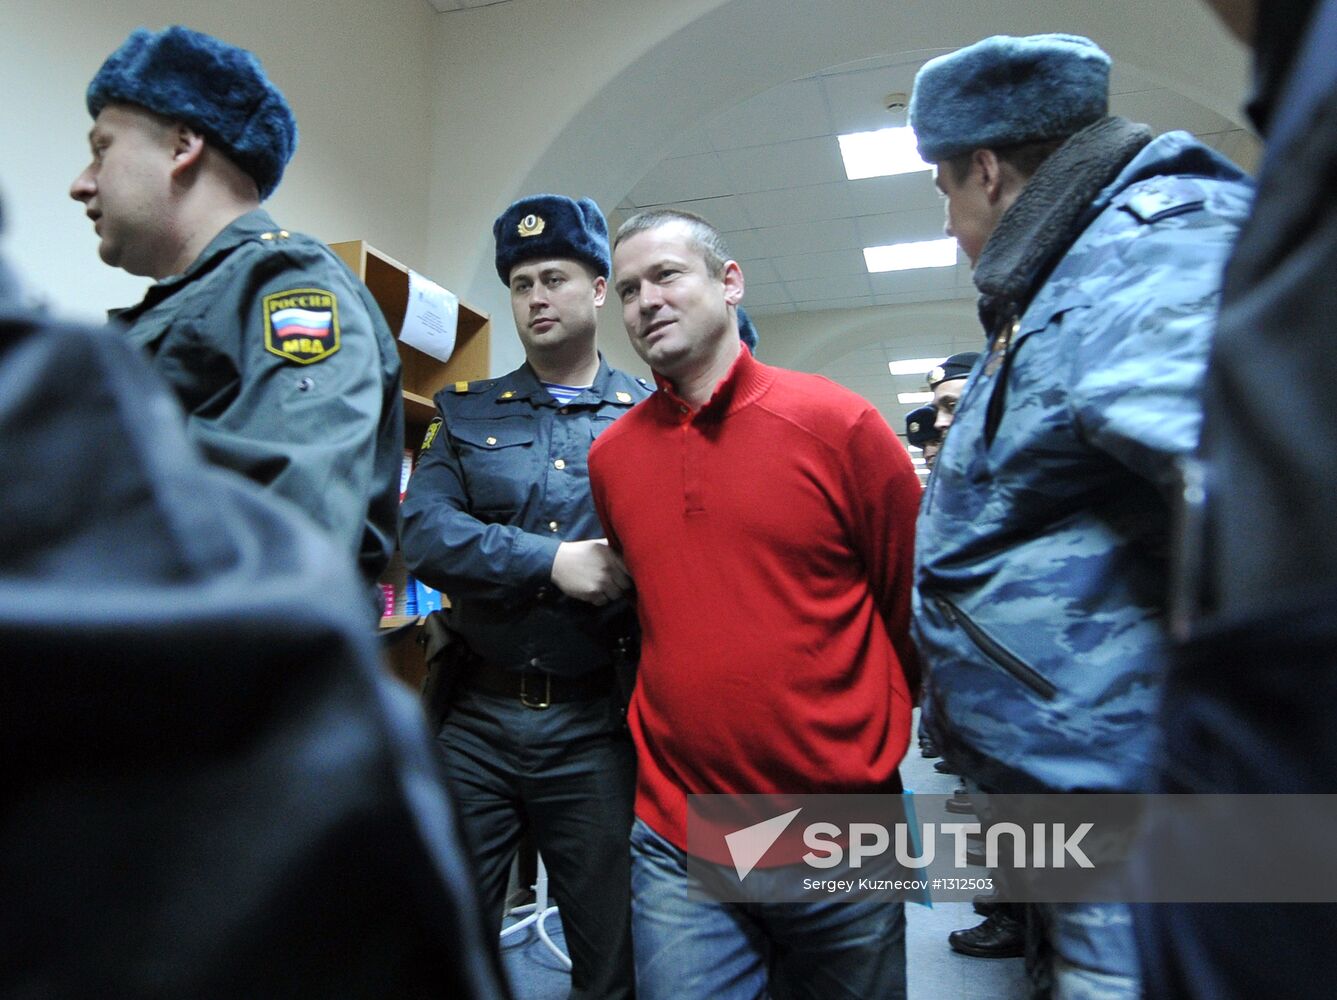 Court considers extendng arrest for Leonid Razvozzhaev